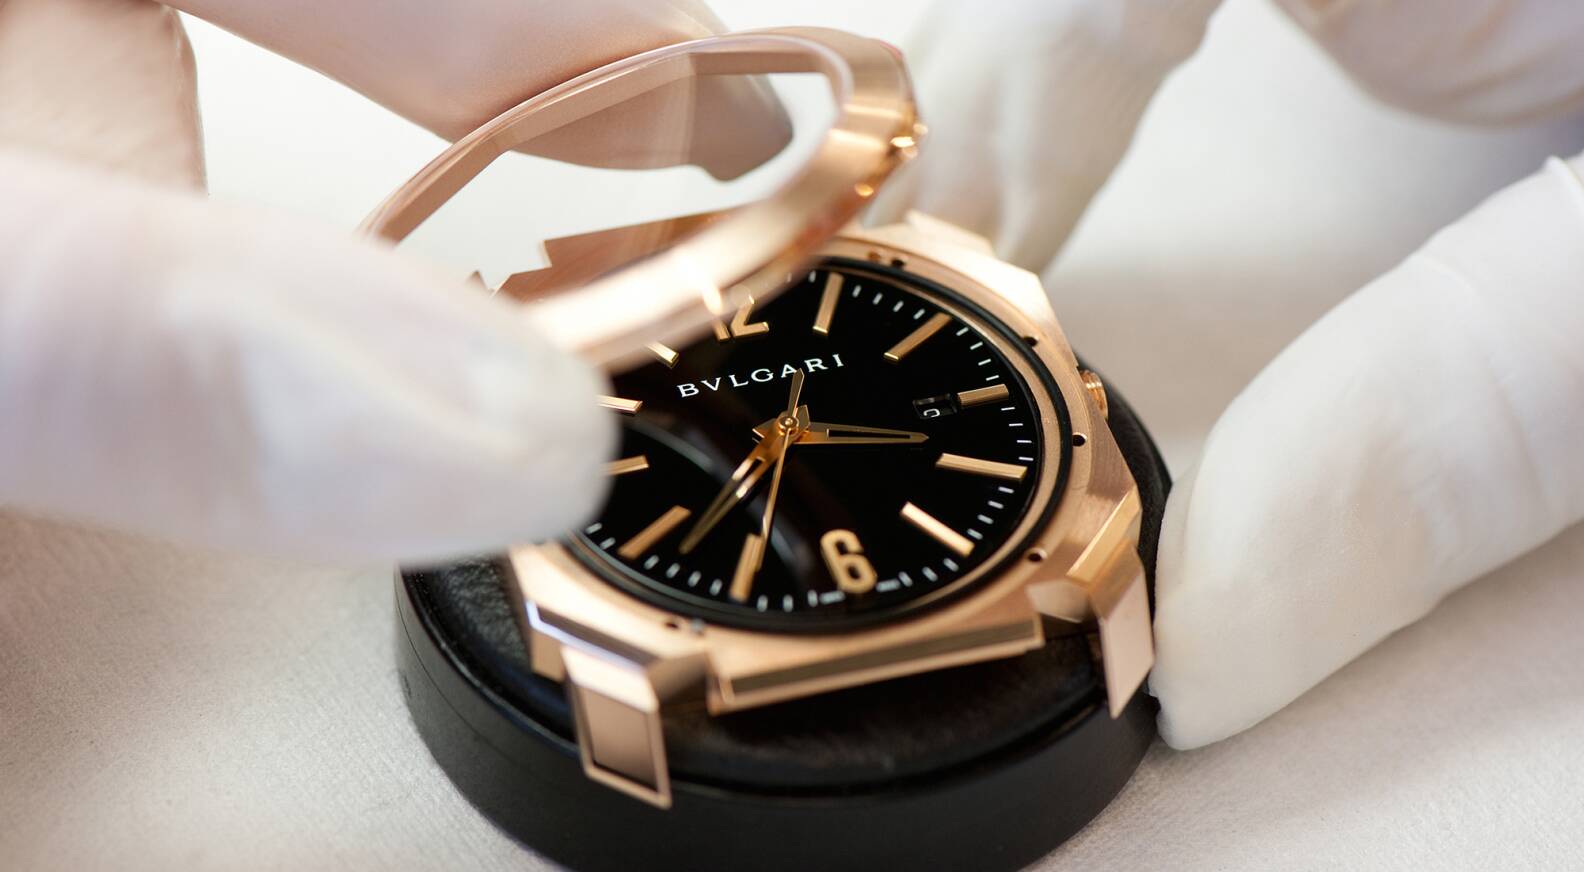 Bulgari: a high-end watch manufacture 